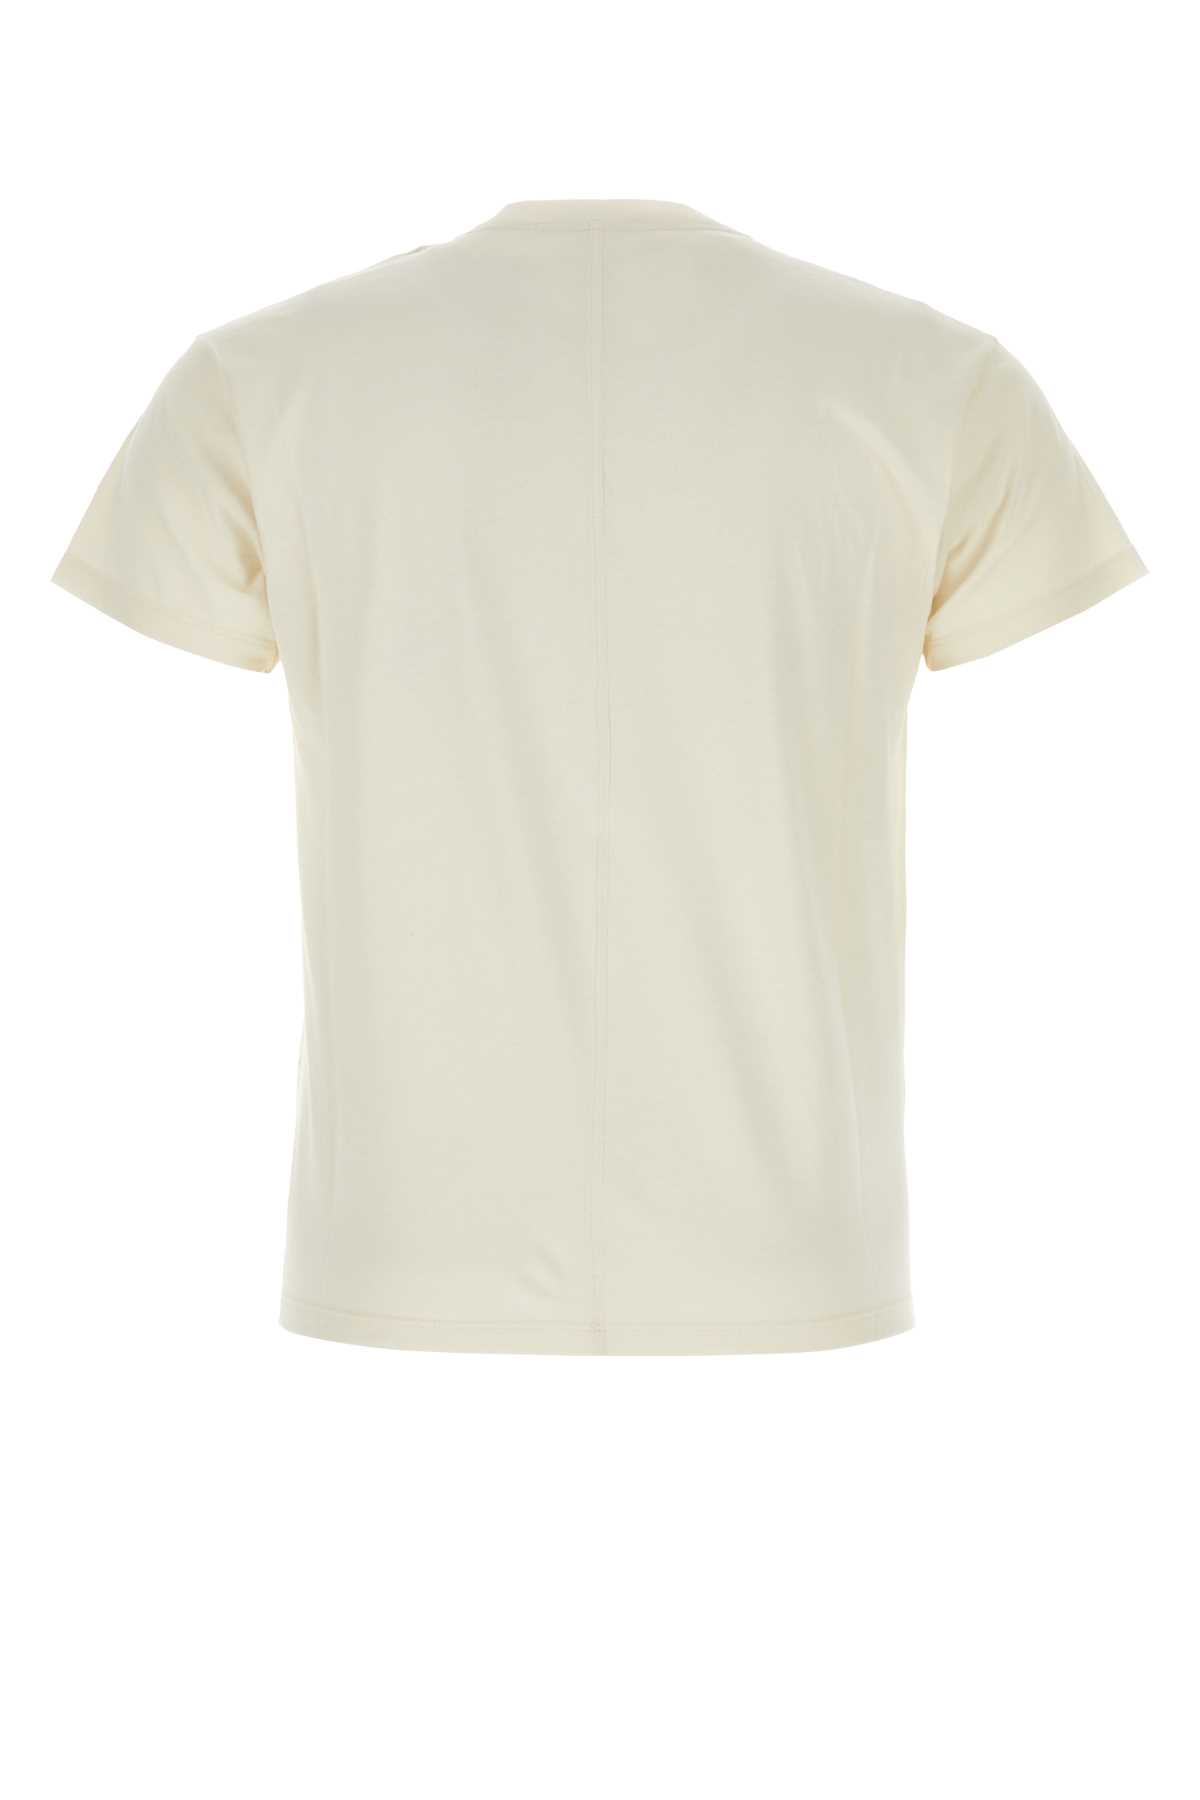 Shop The Row Ivory Cotton Blaine T-shirt